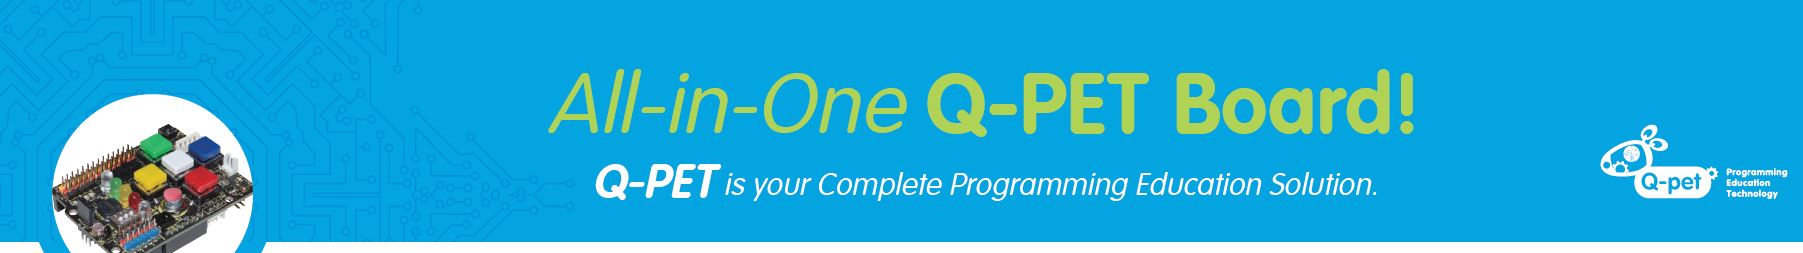 Q-PET(Programming Education Technology)